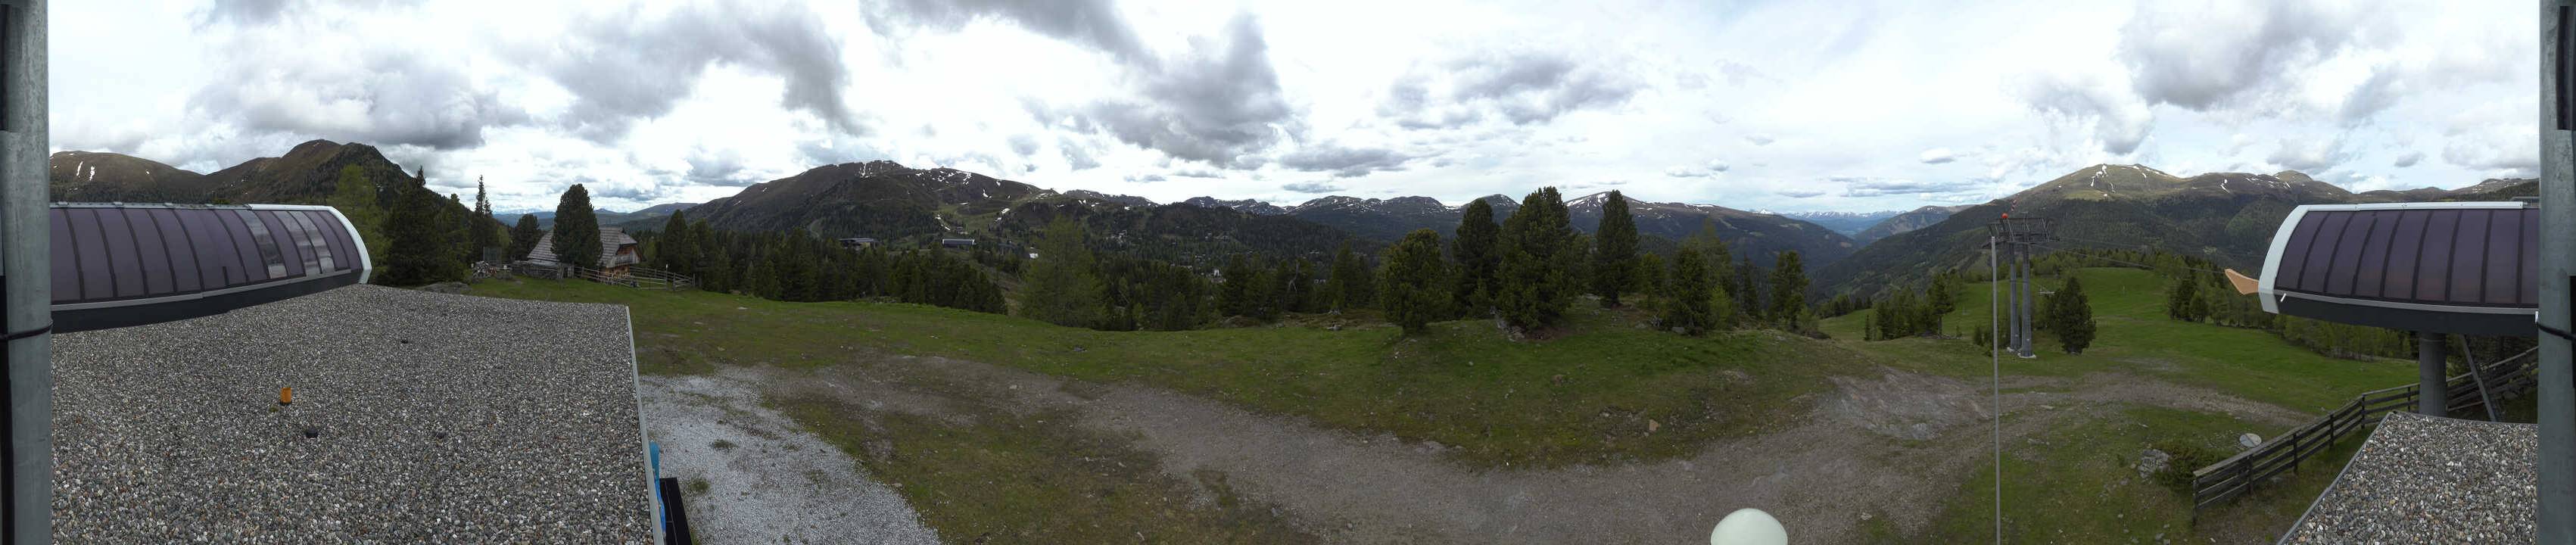 Turracher Höhe / Turrachbahn 2.000 m - Blickrichtung Rinsennock